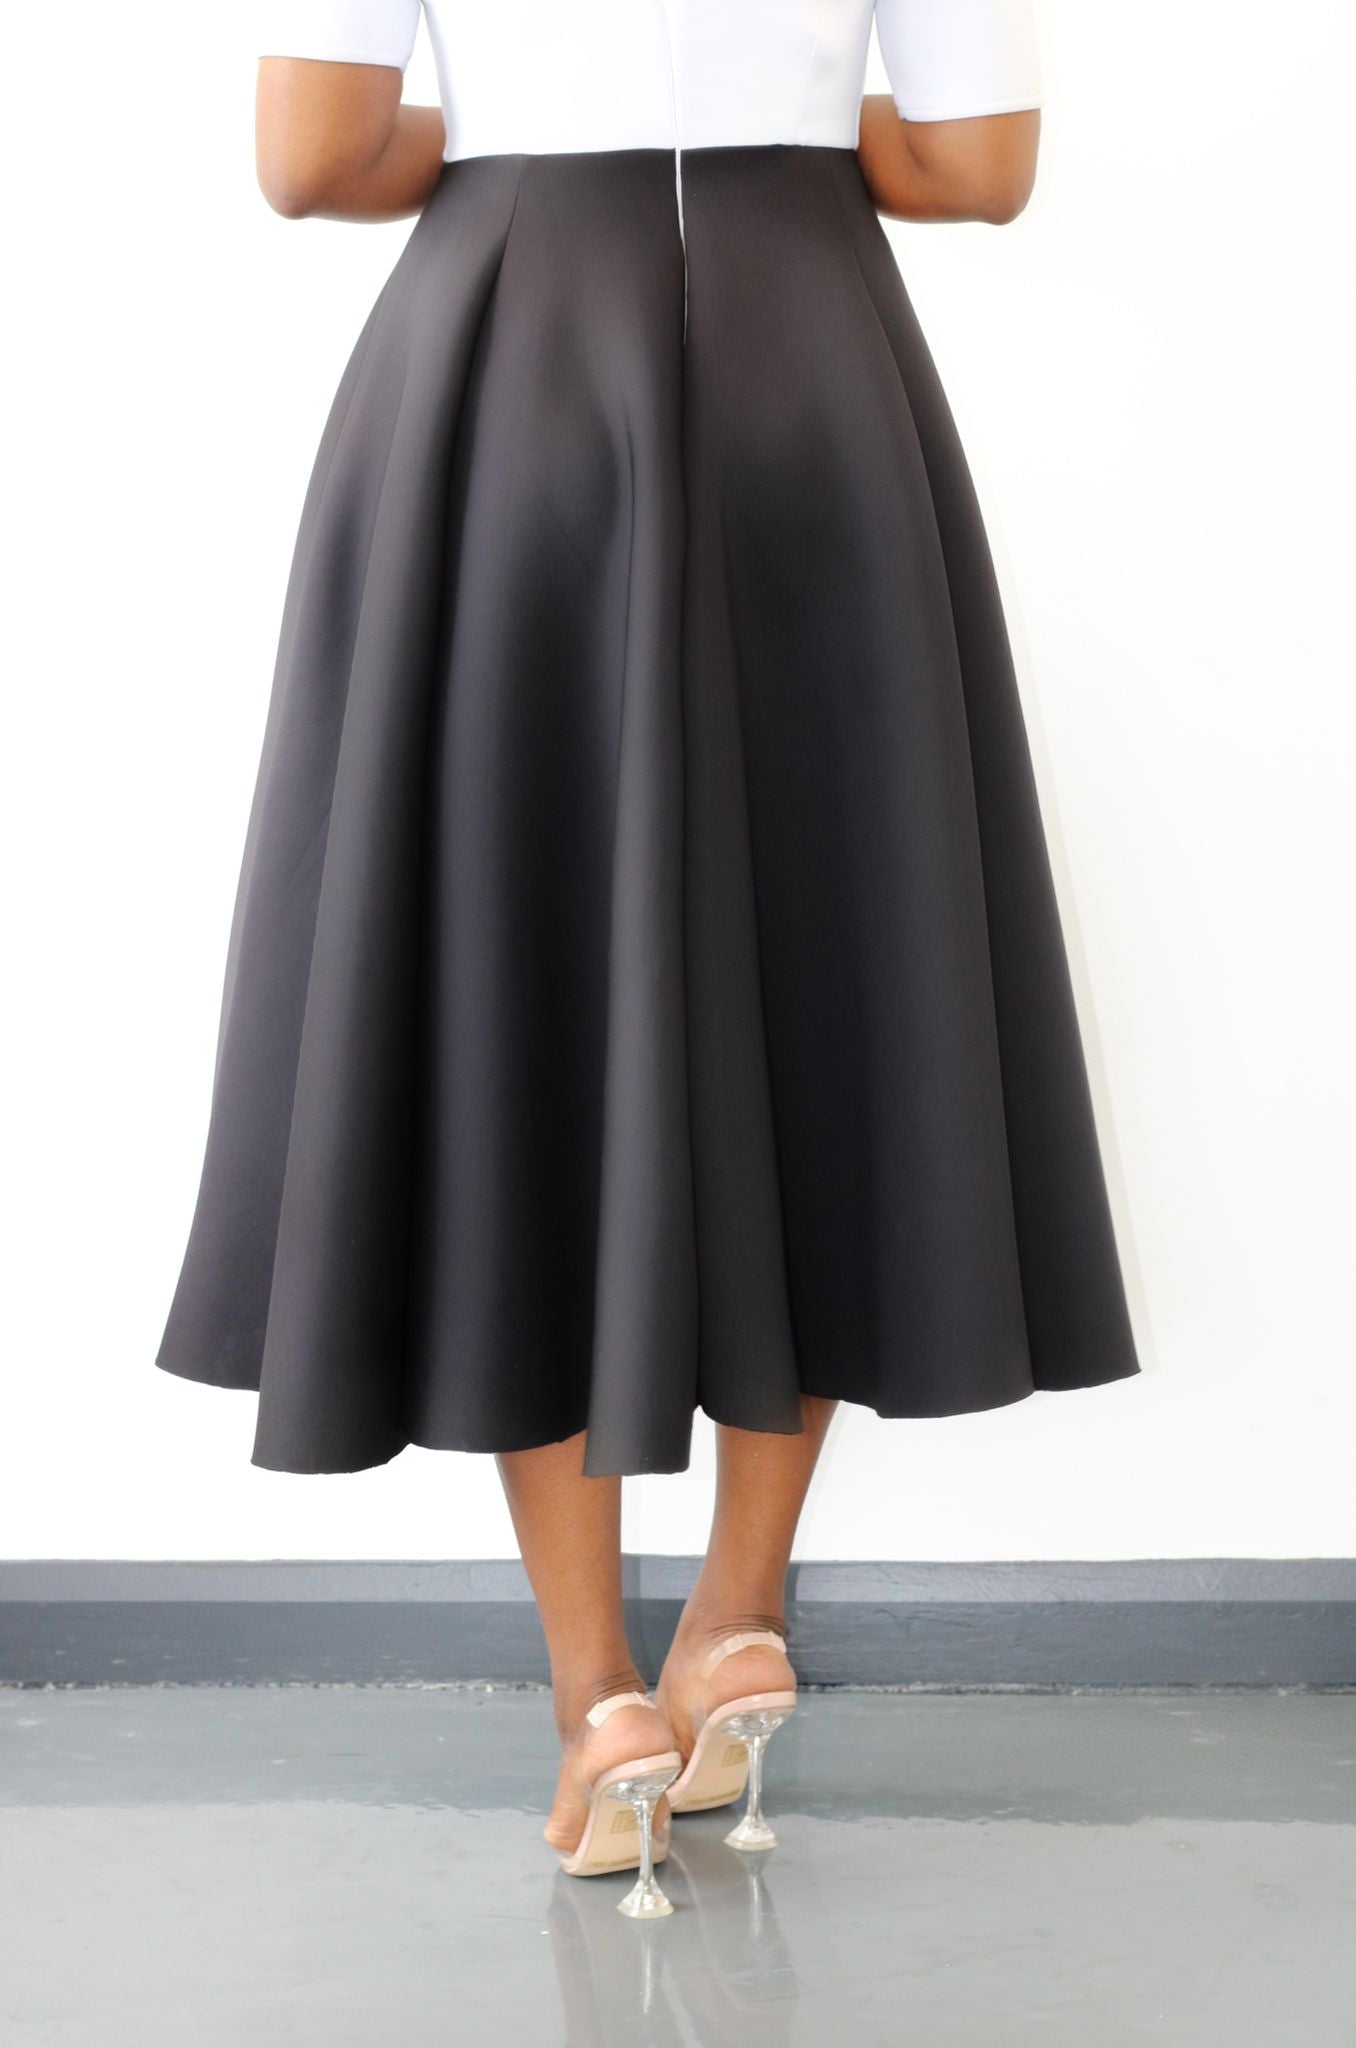 Vintage Petticoat – Modestique Designs